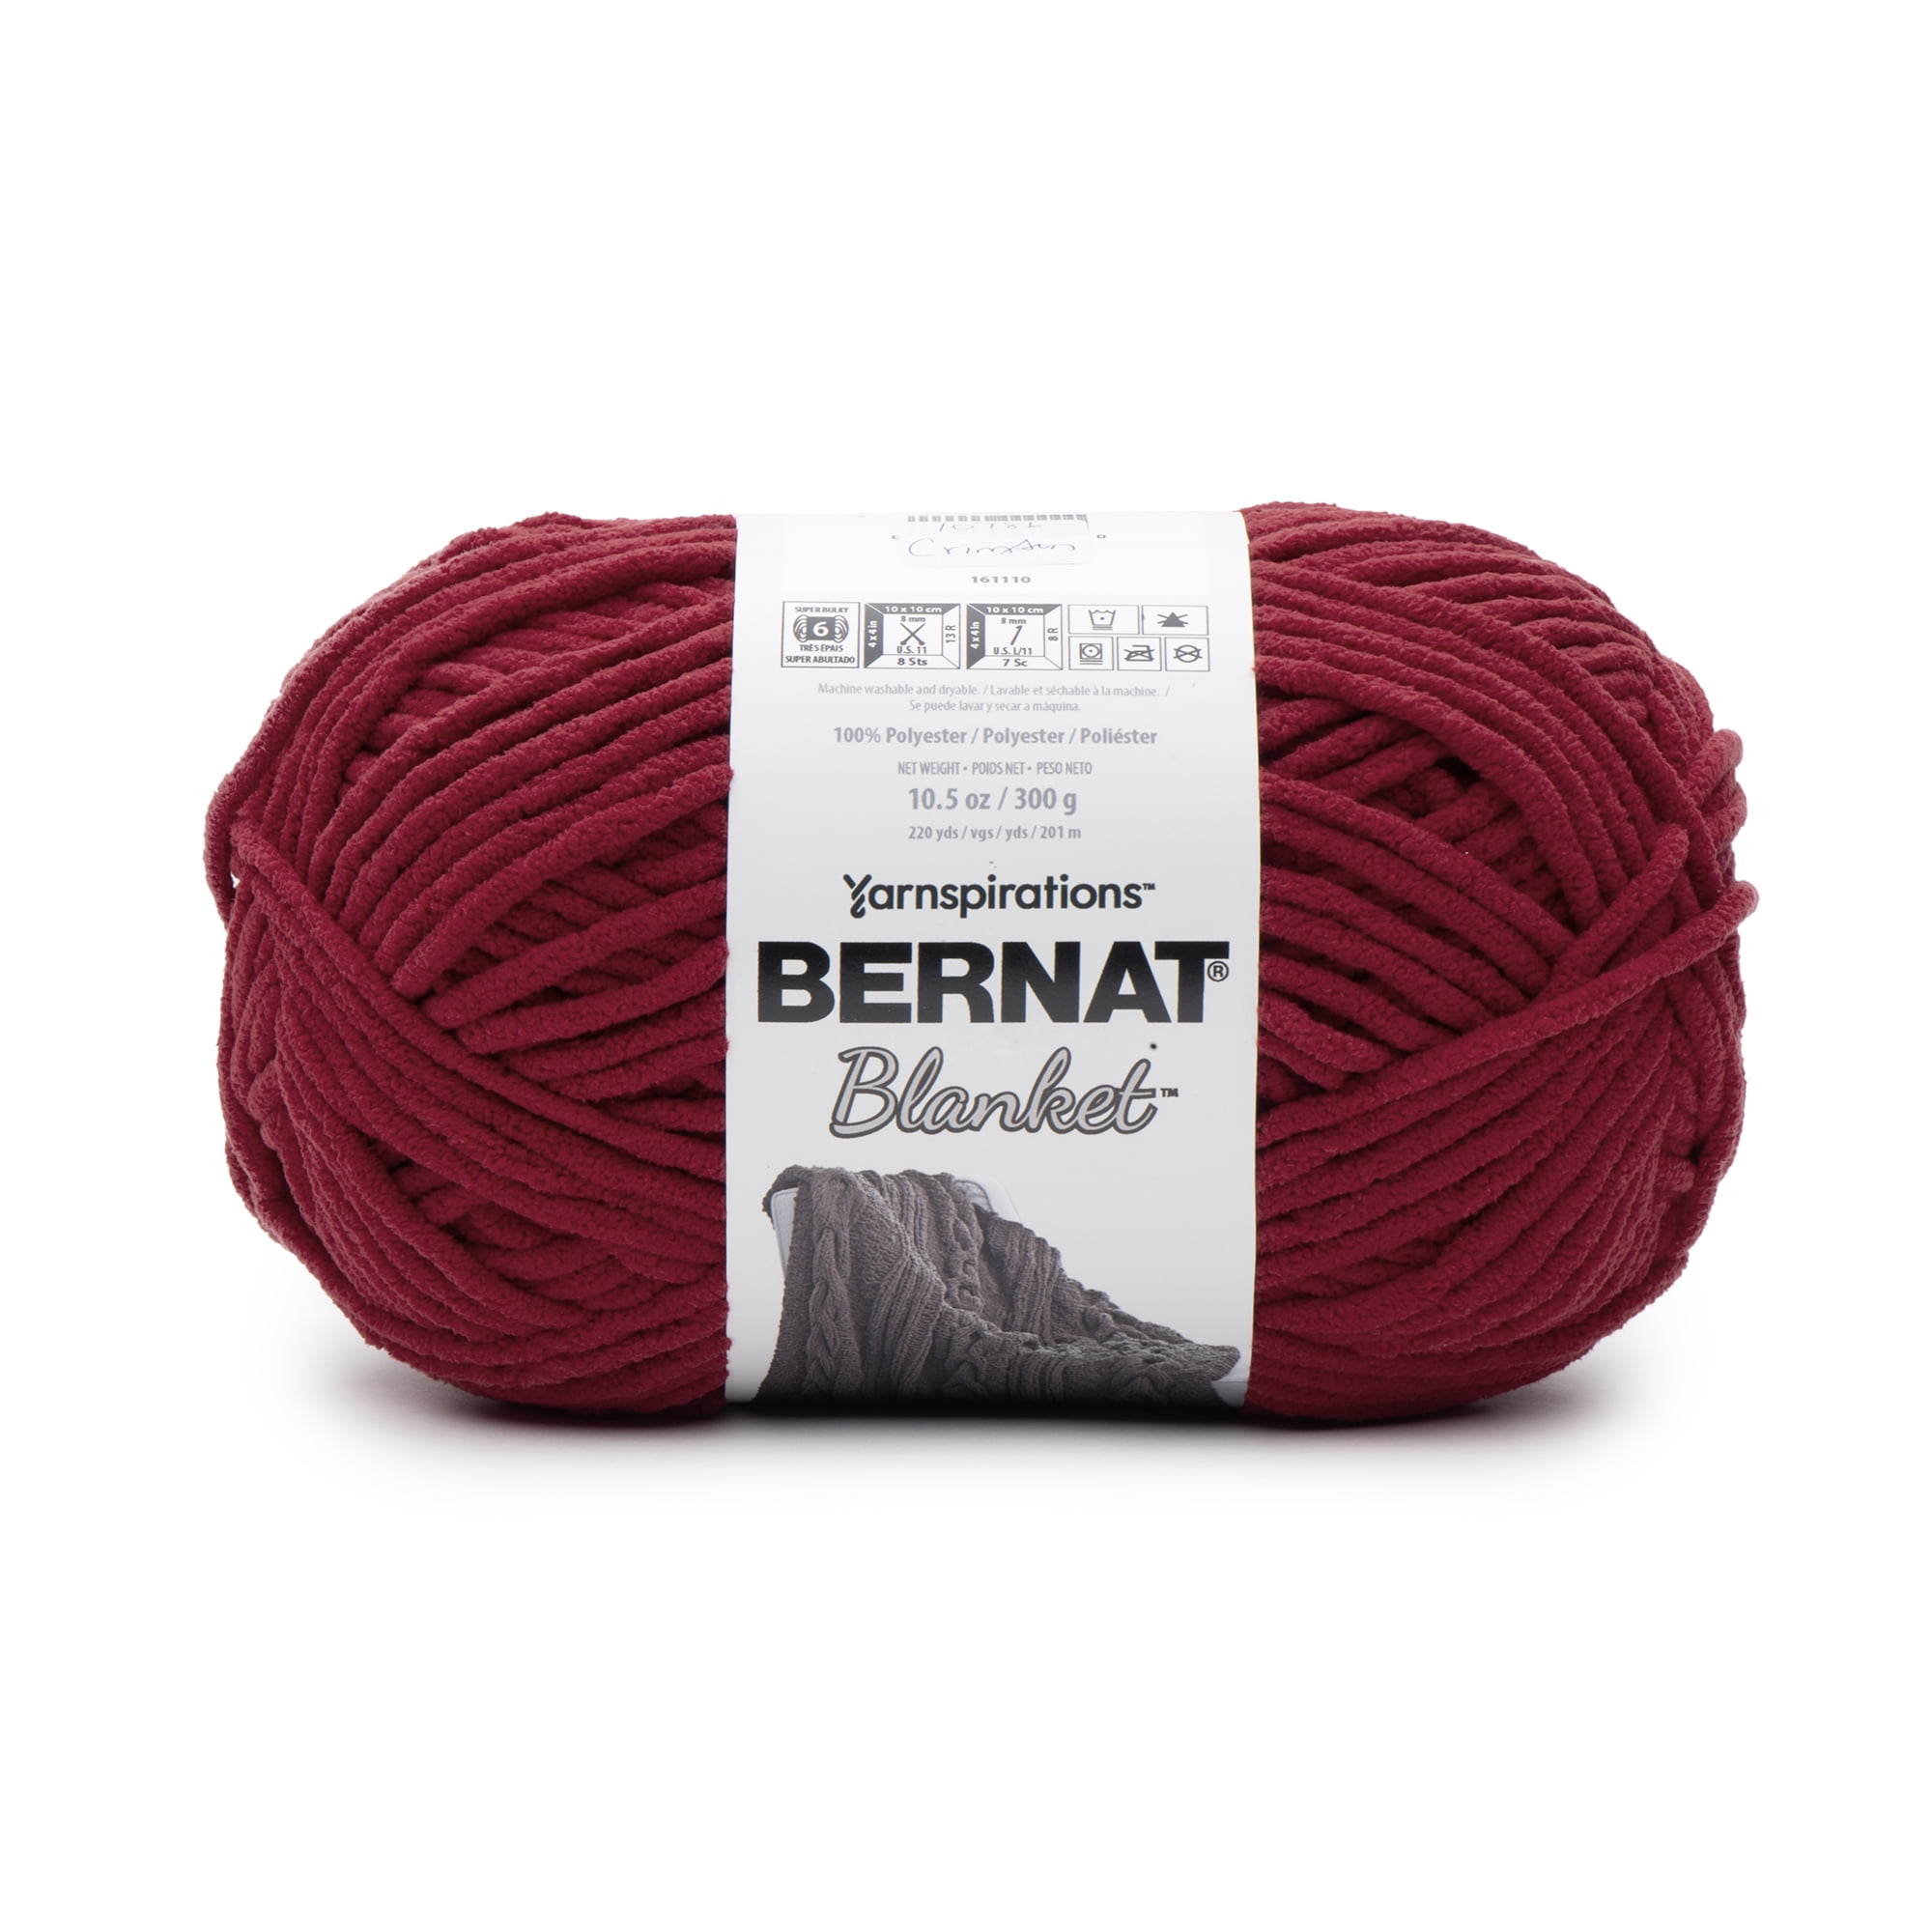 Bernat Blanket Super Bulky Acrylic Yarn - 2 Pack of 300g/10.5oz #6 Chunky Chenille Heavy Weight Yarn for Knitting and Crocheting, Amigurumi, Thick